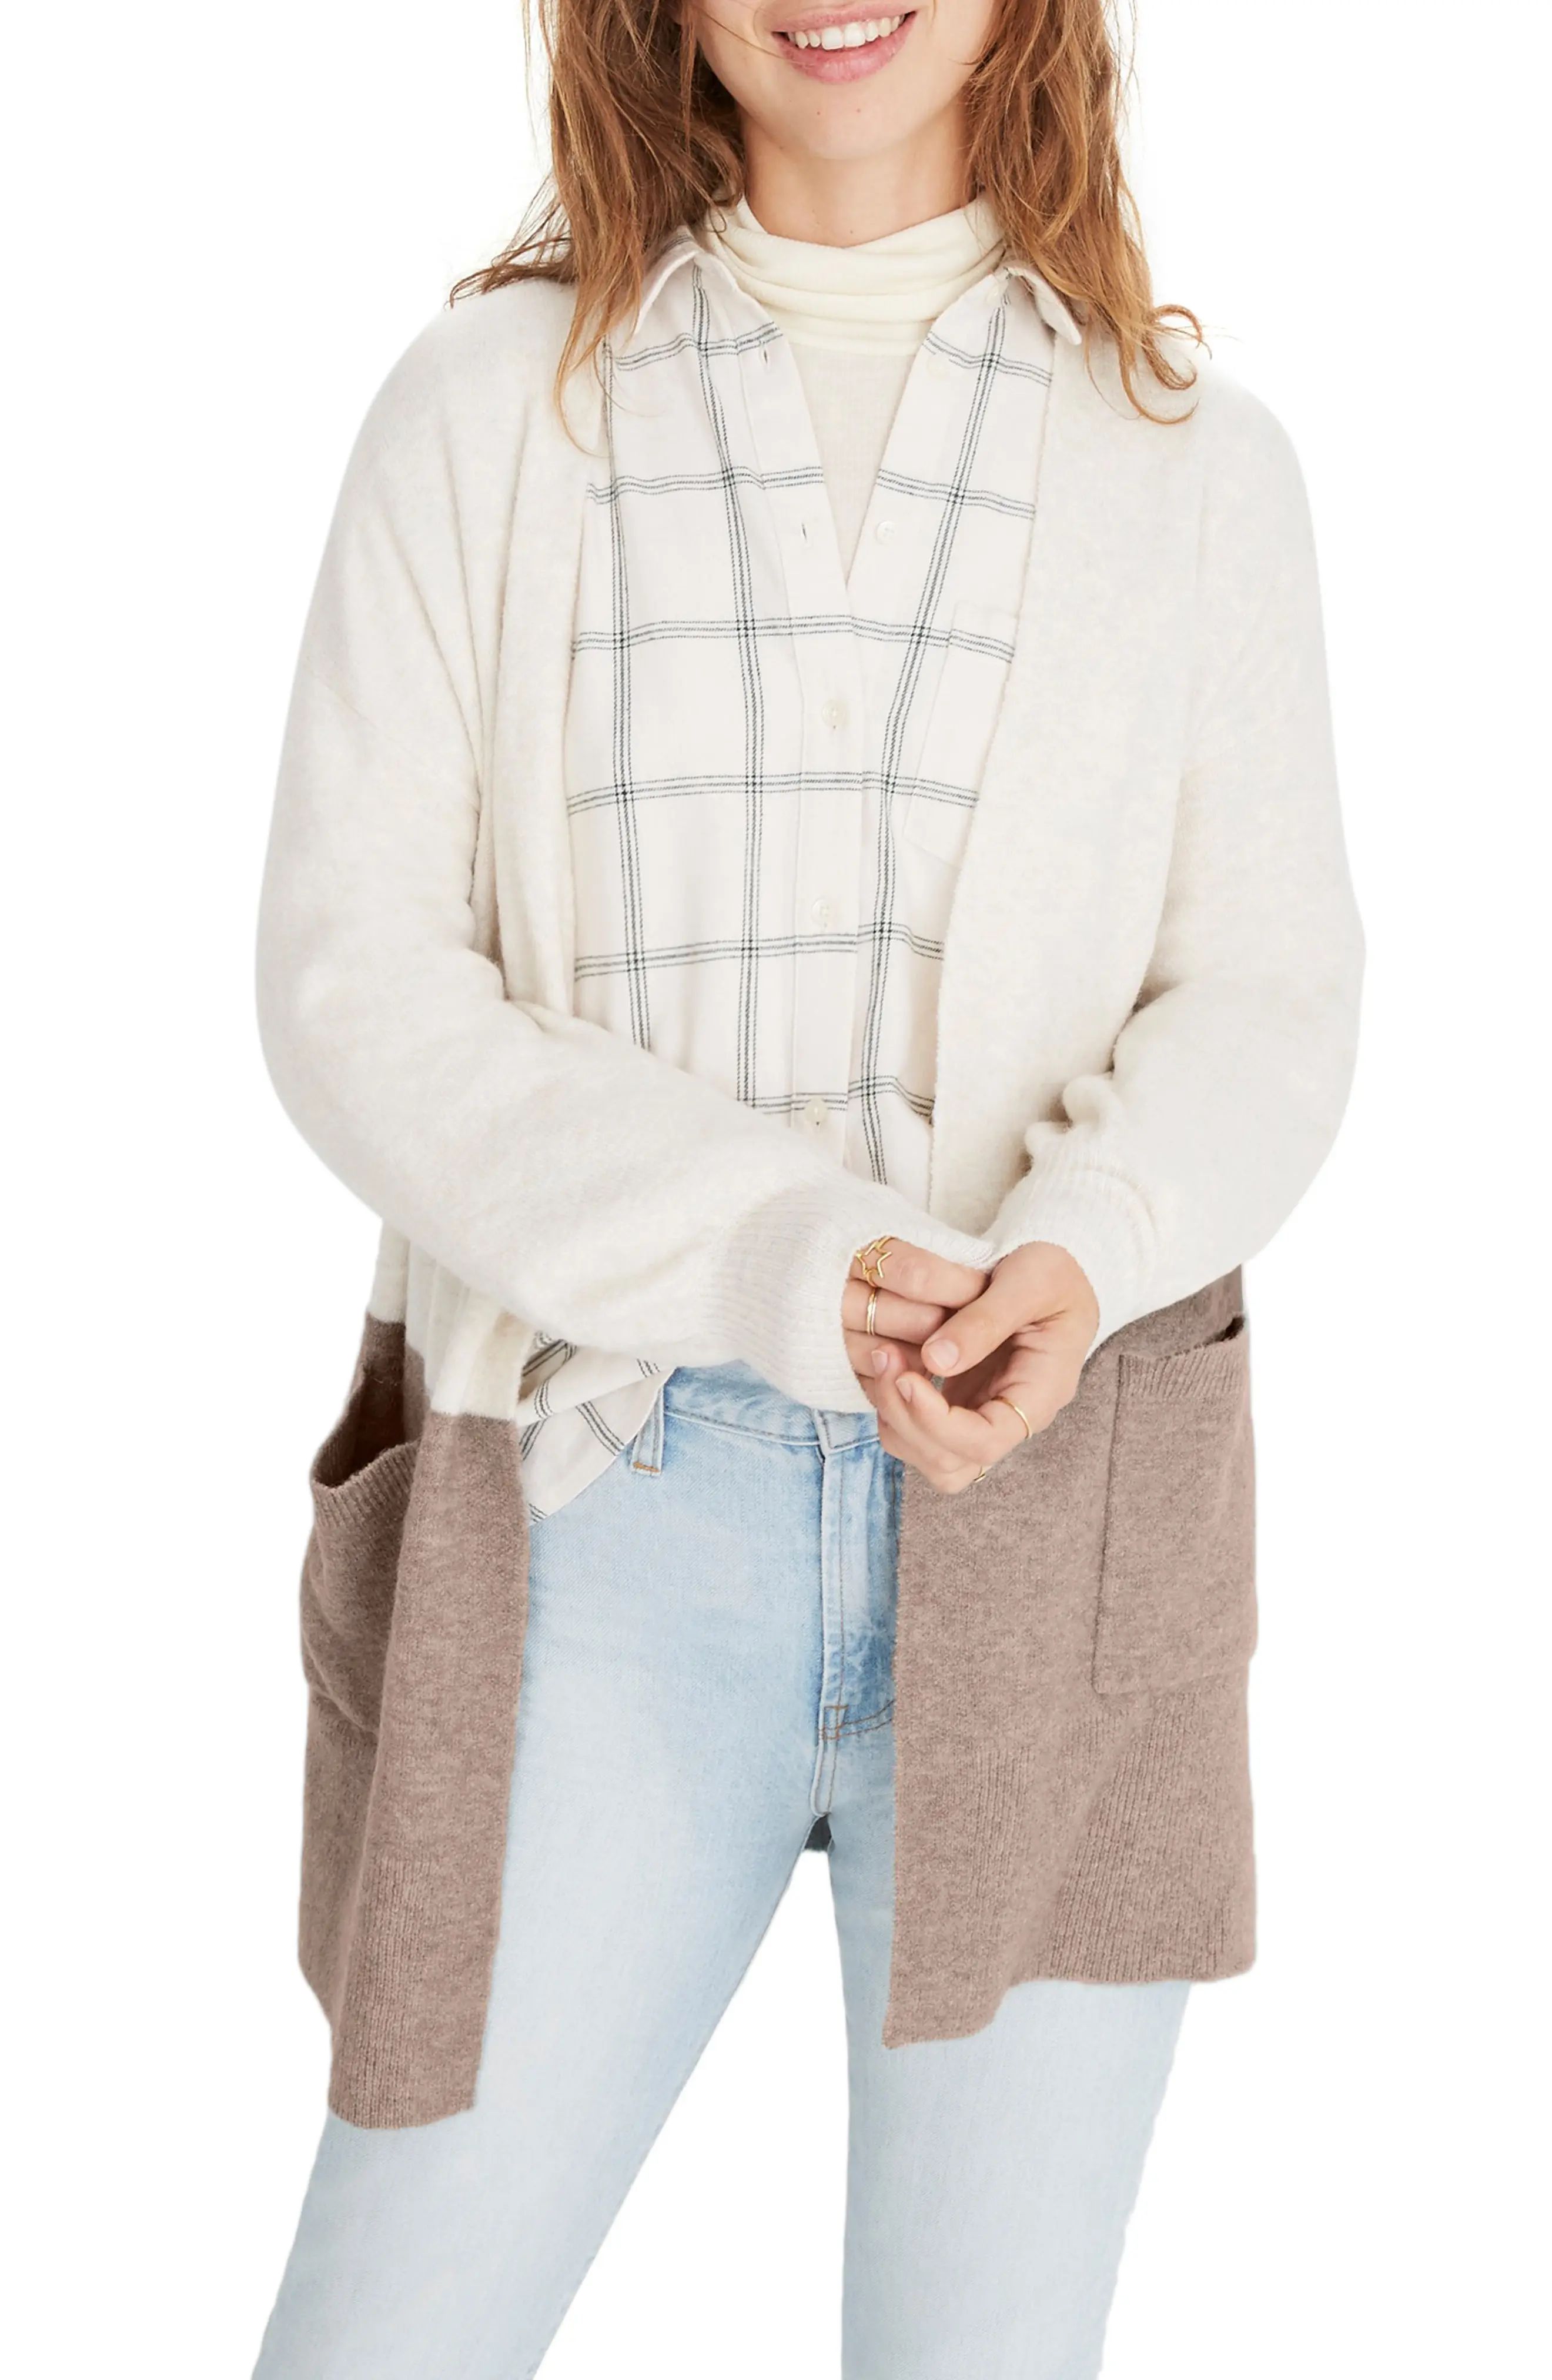 Madewell Kent Colorblock Cardigan Sweater (Regular & Plus Size) | Nordstrom